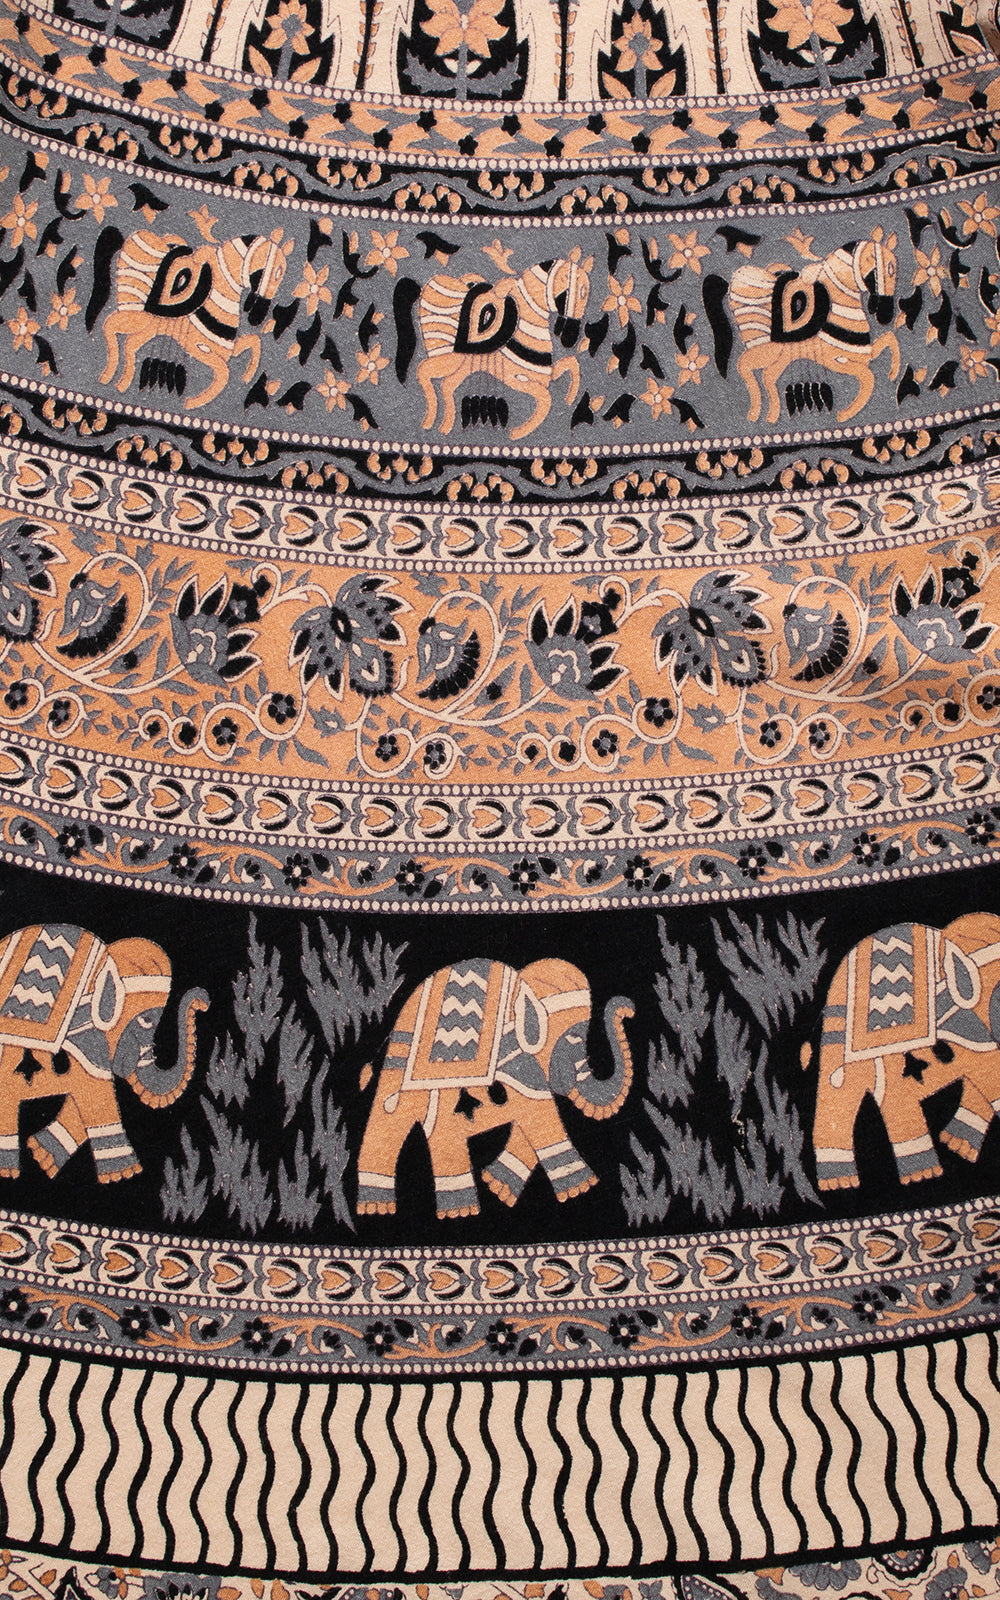 1970s Indian Cotton Novelty Print Wrap Skirt | medium/large